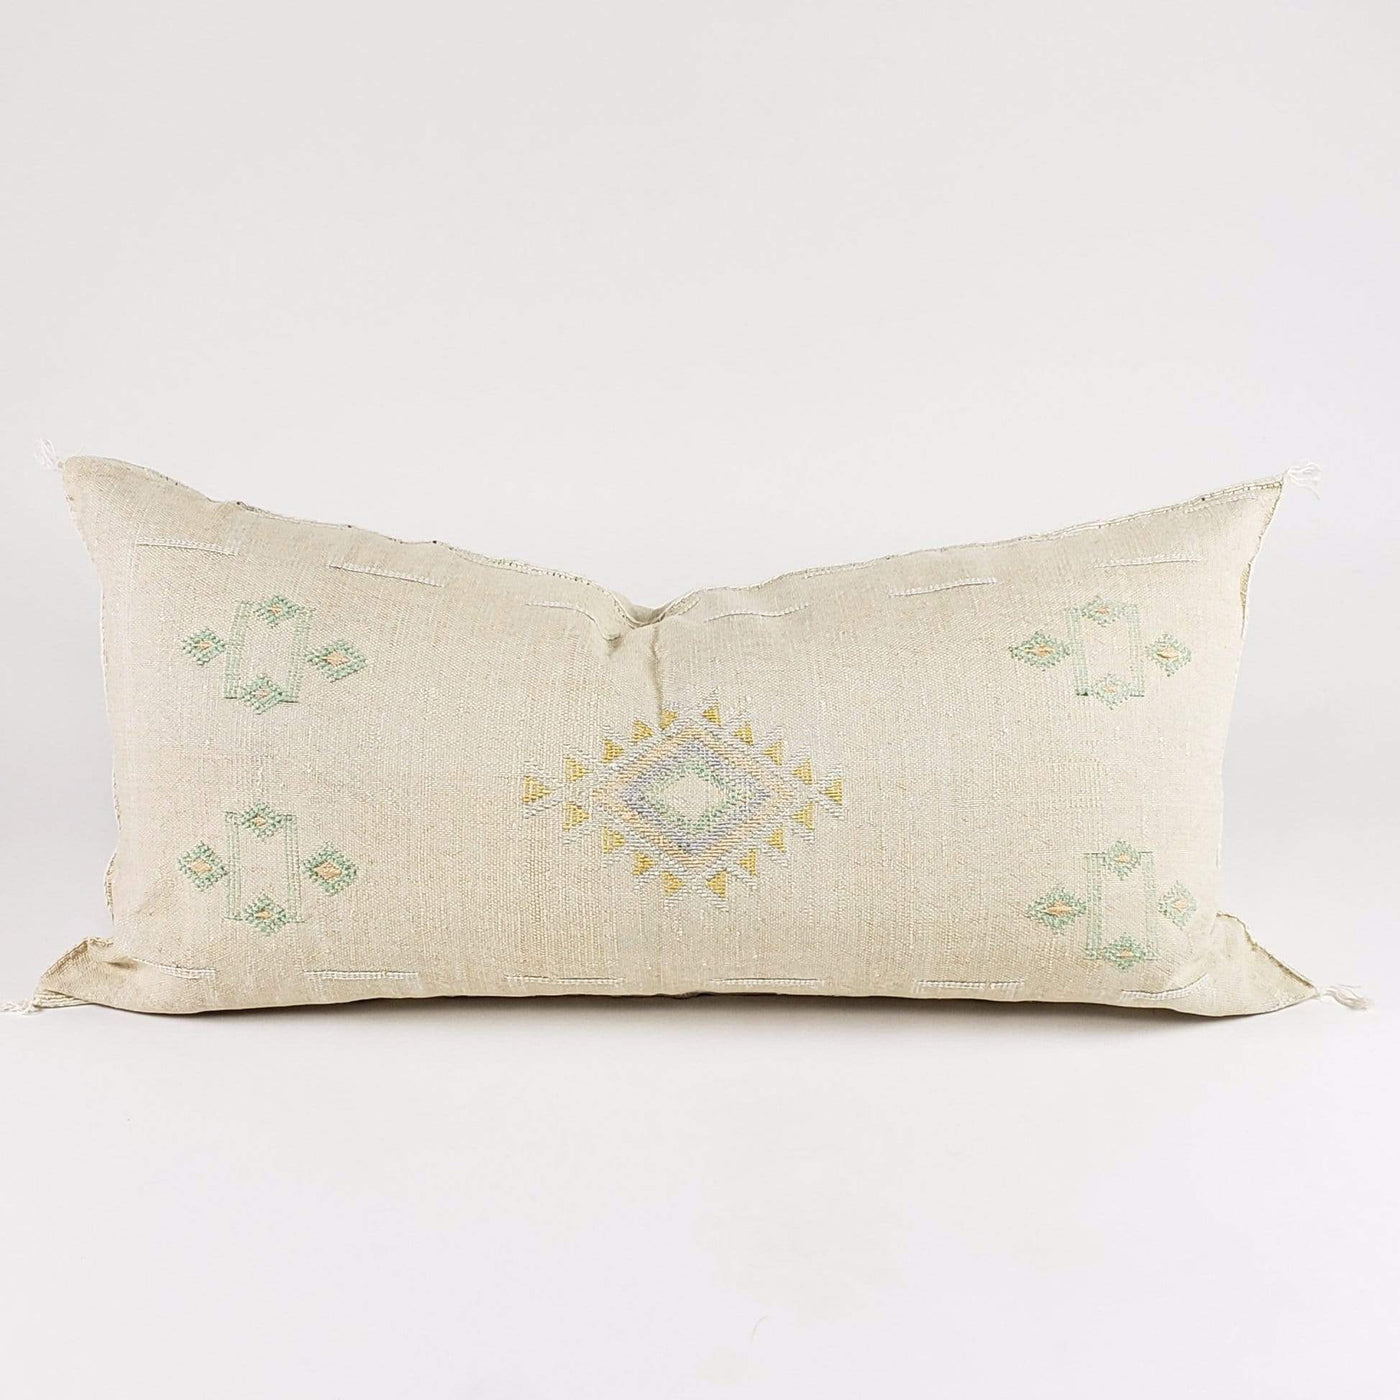 Bryar Wolf Handmade Decorative Throw Pillows With Insert / 22" x 38" AMIRA